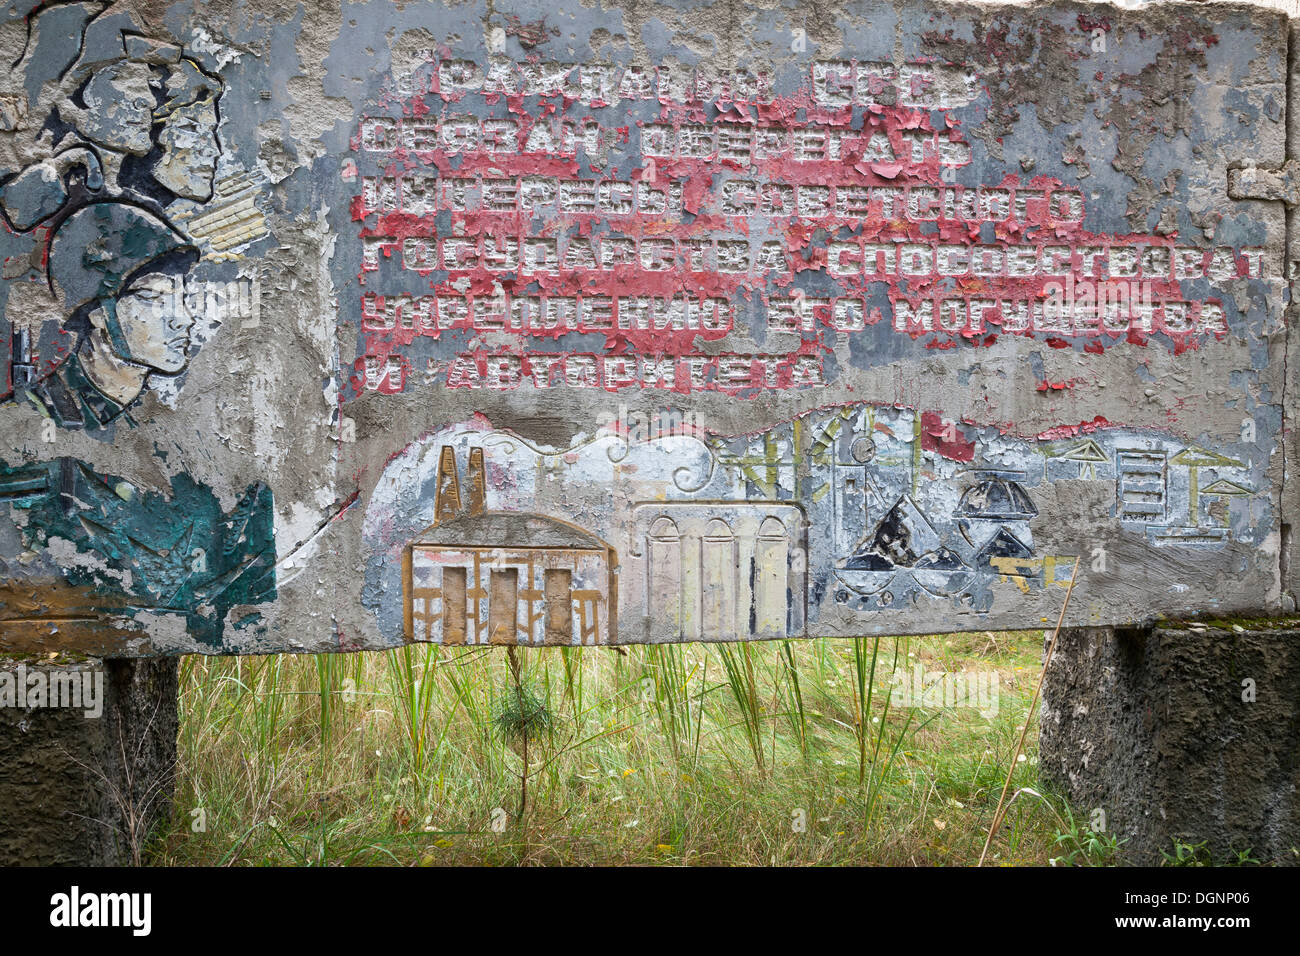 Soviet Propoganda at an Abandoned Soviet missile base, Vogelsang, Brandenburg, Germany Stock Photo